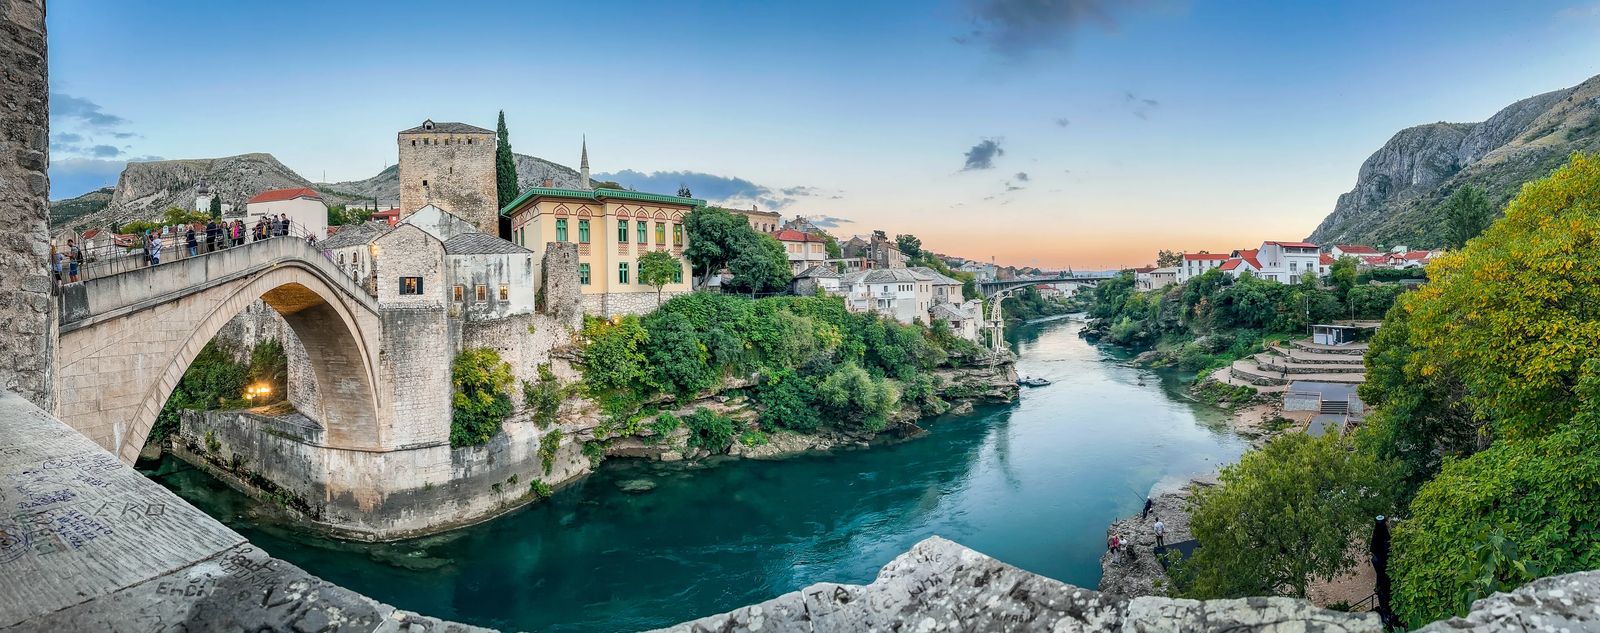 One Day In Mostar Bosnia - Stari Most